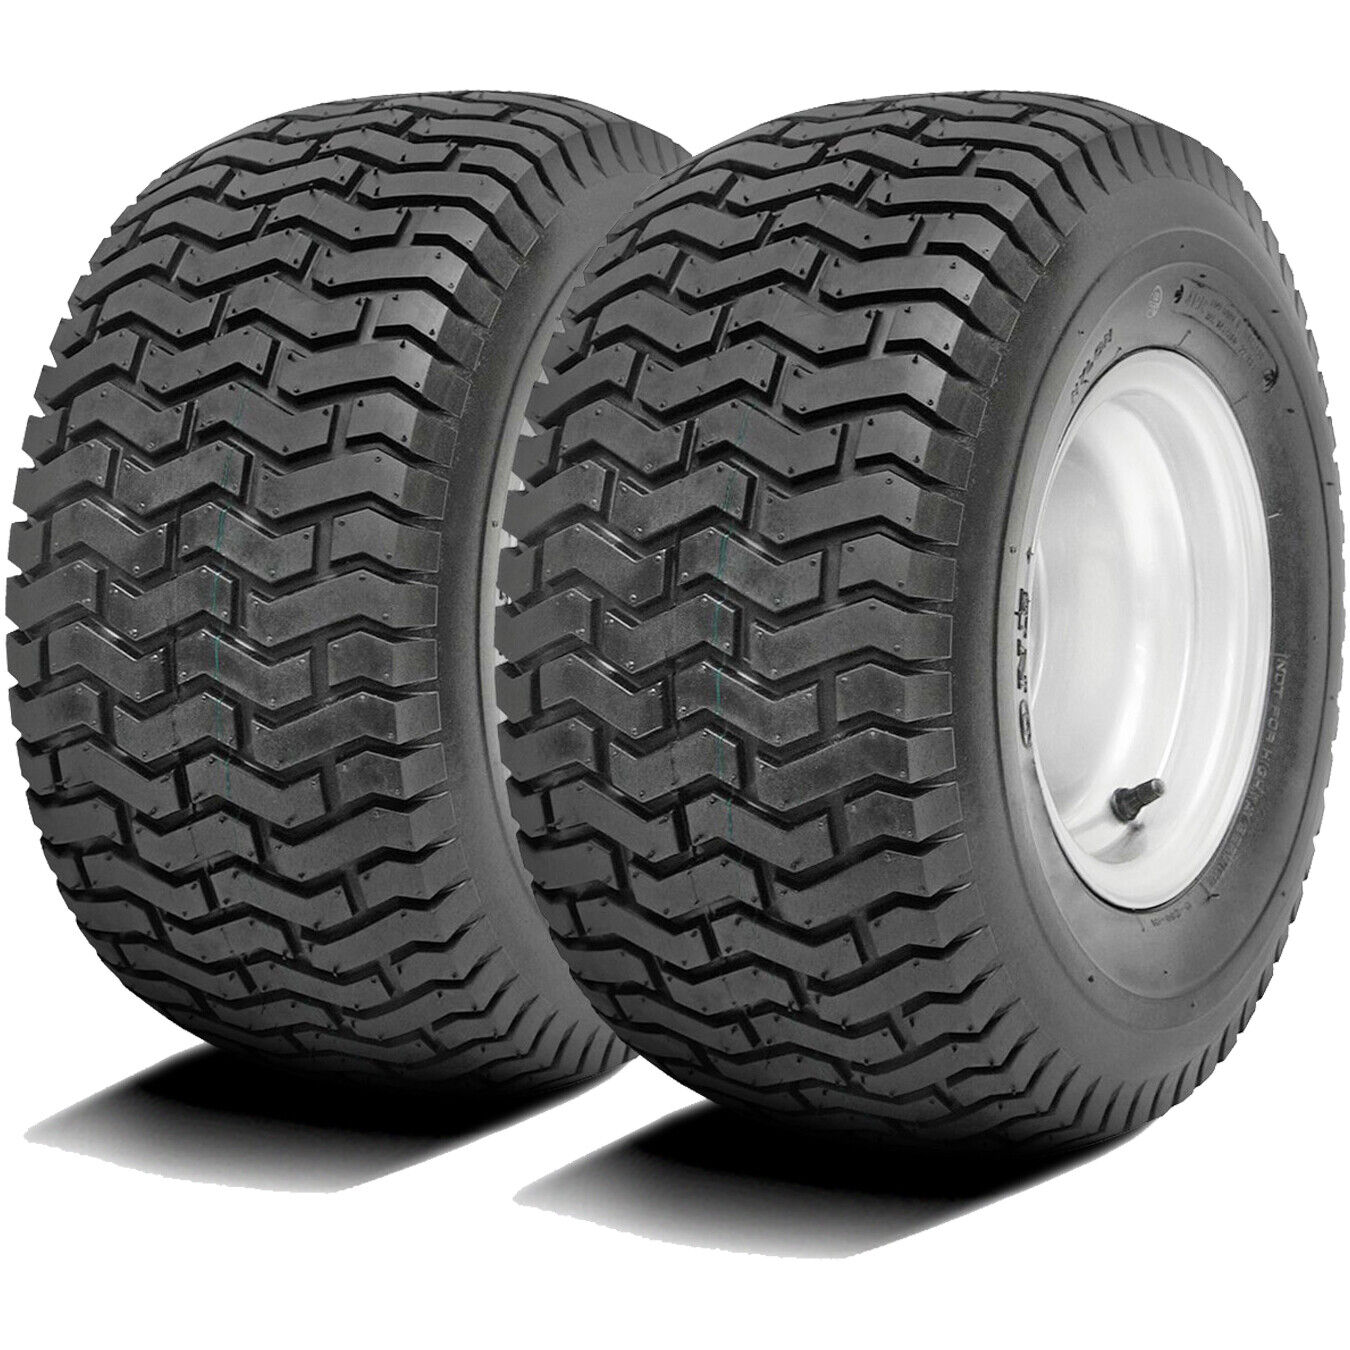 2 Tires Deestone D265 18X9.50-8 4 Ply Lawn & Garden